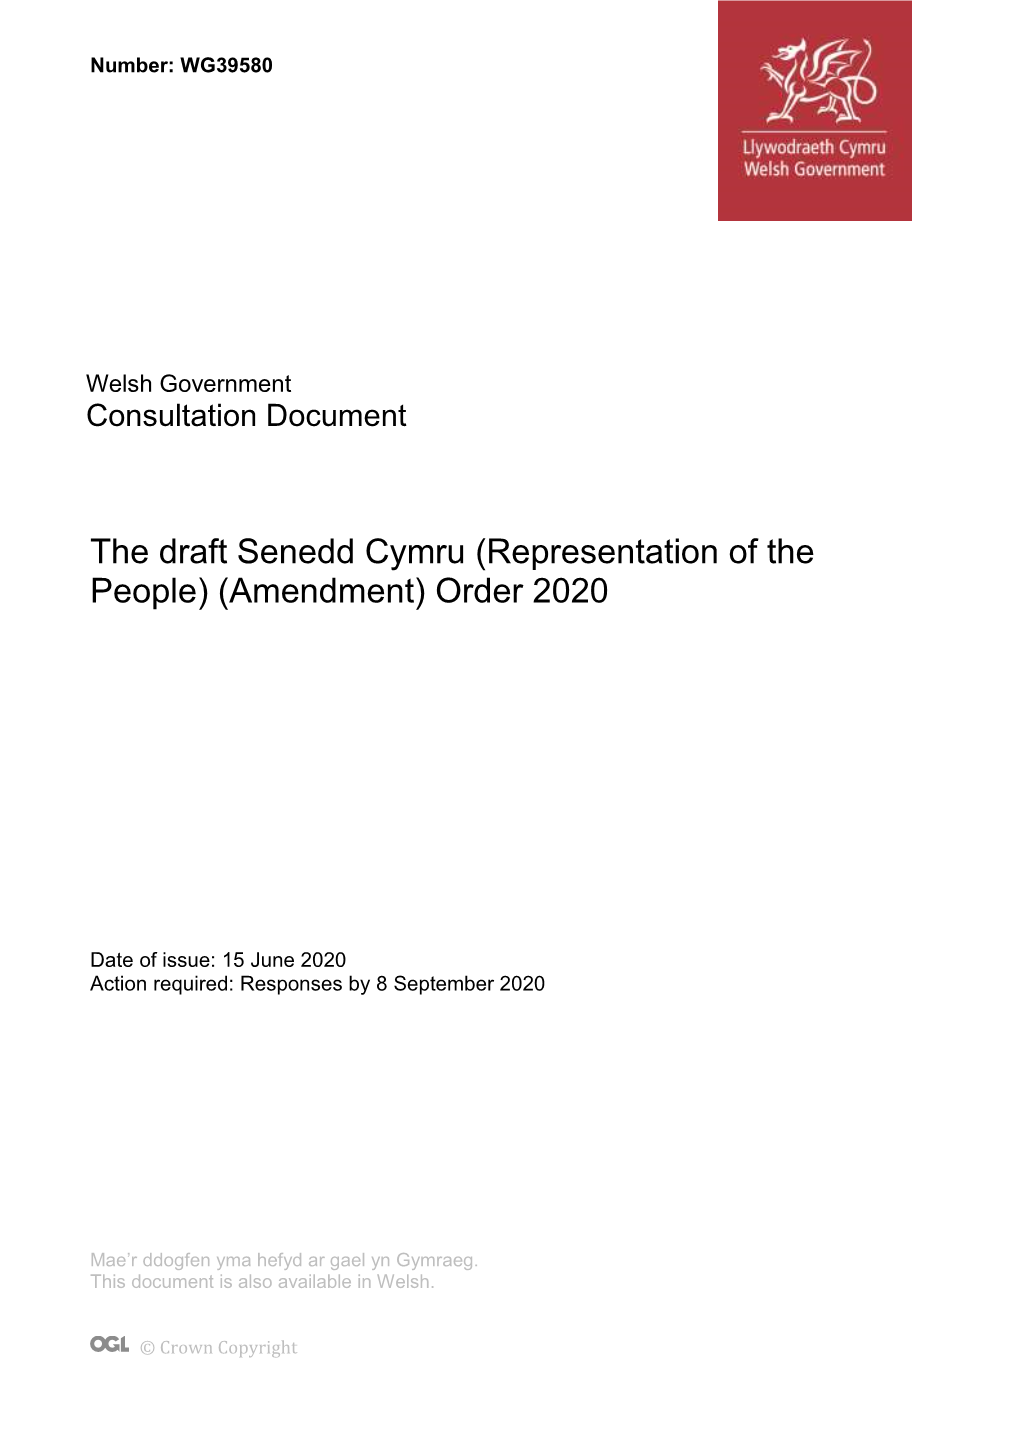 The Draft Senedd Cymru (Representation of the People) (Amendment) Order 2020